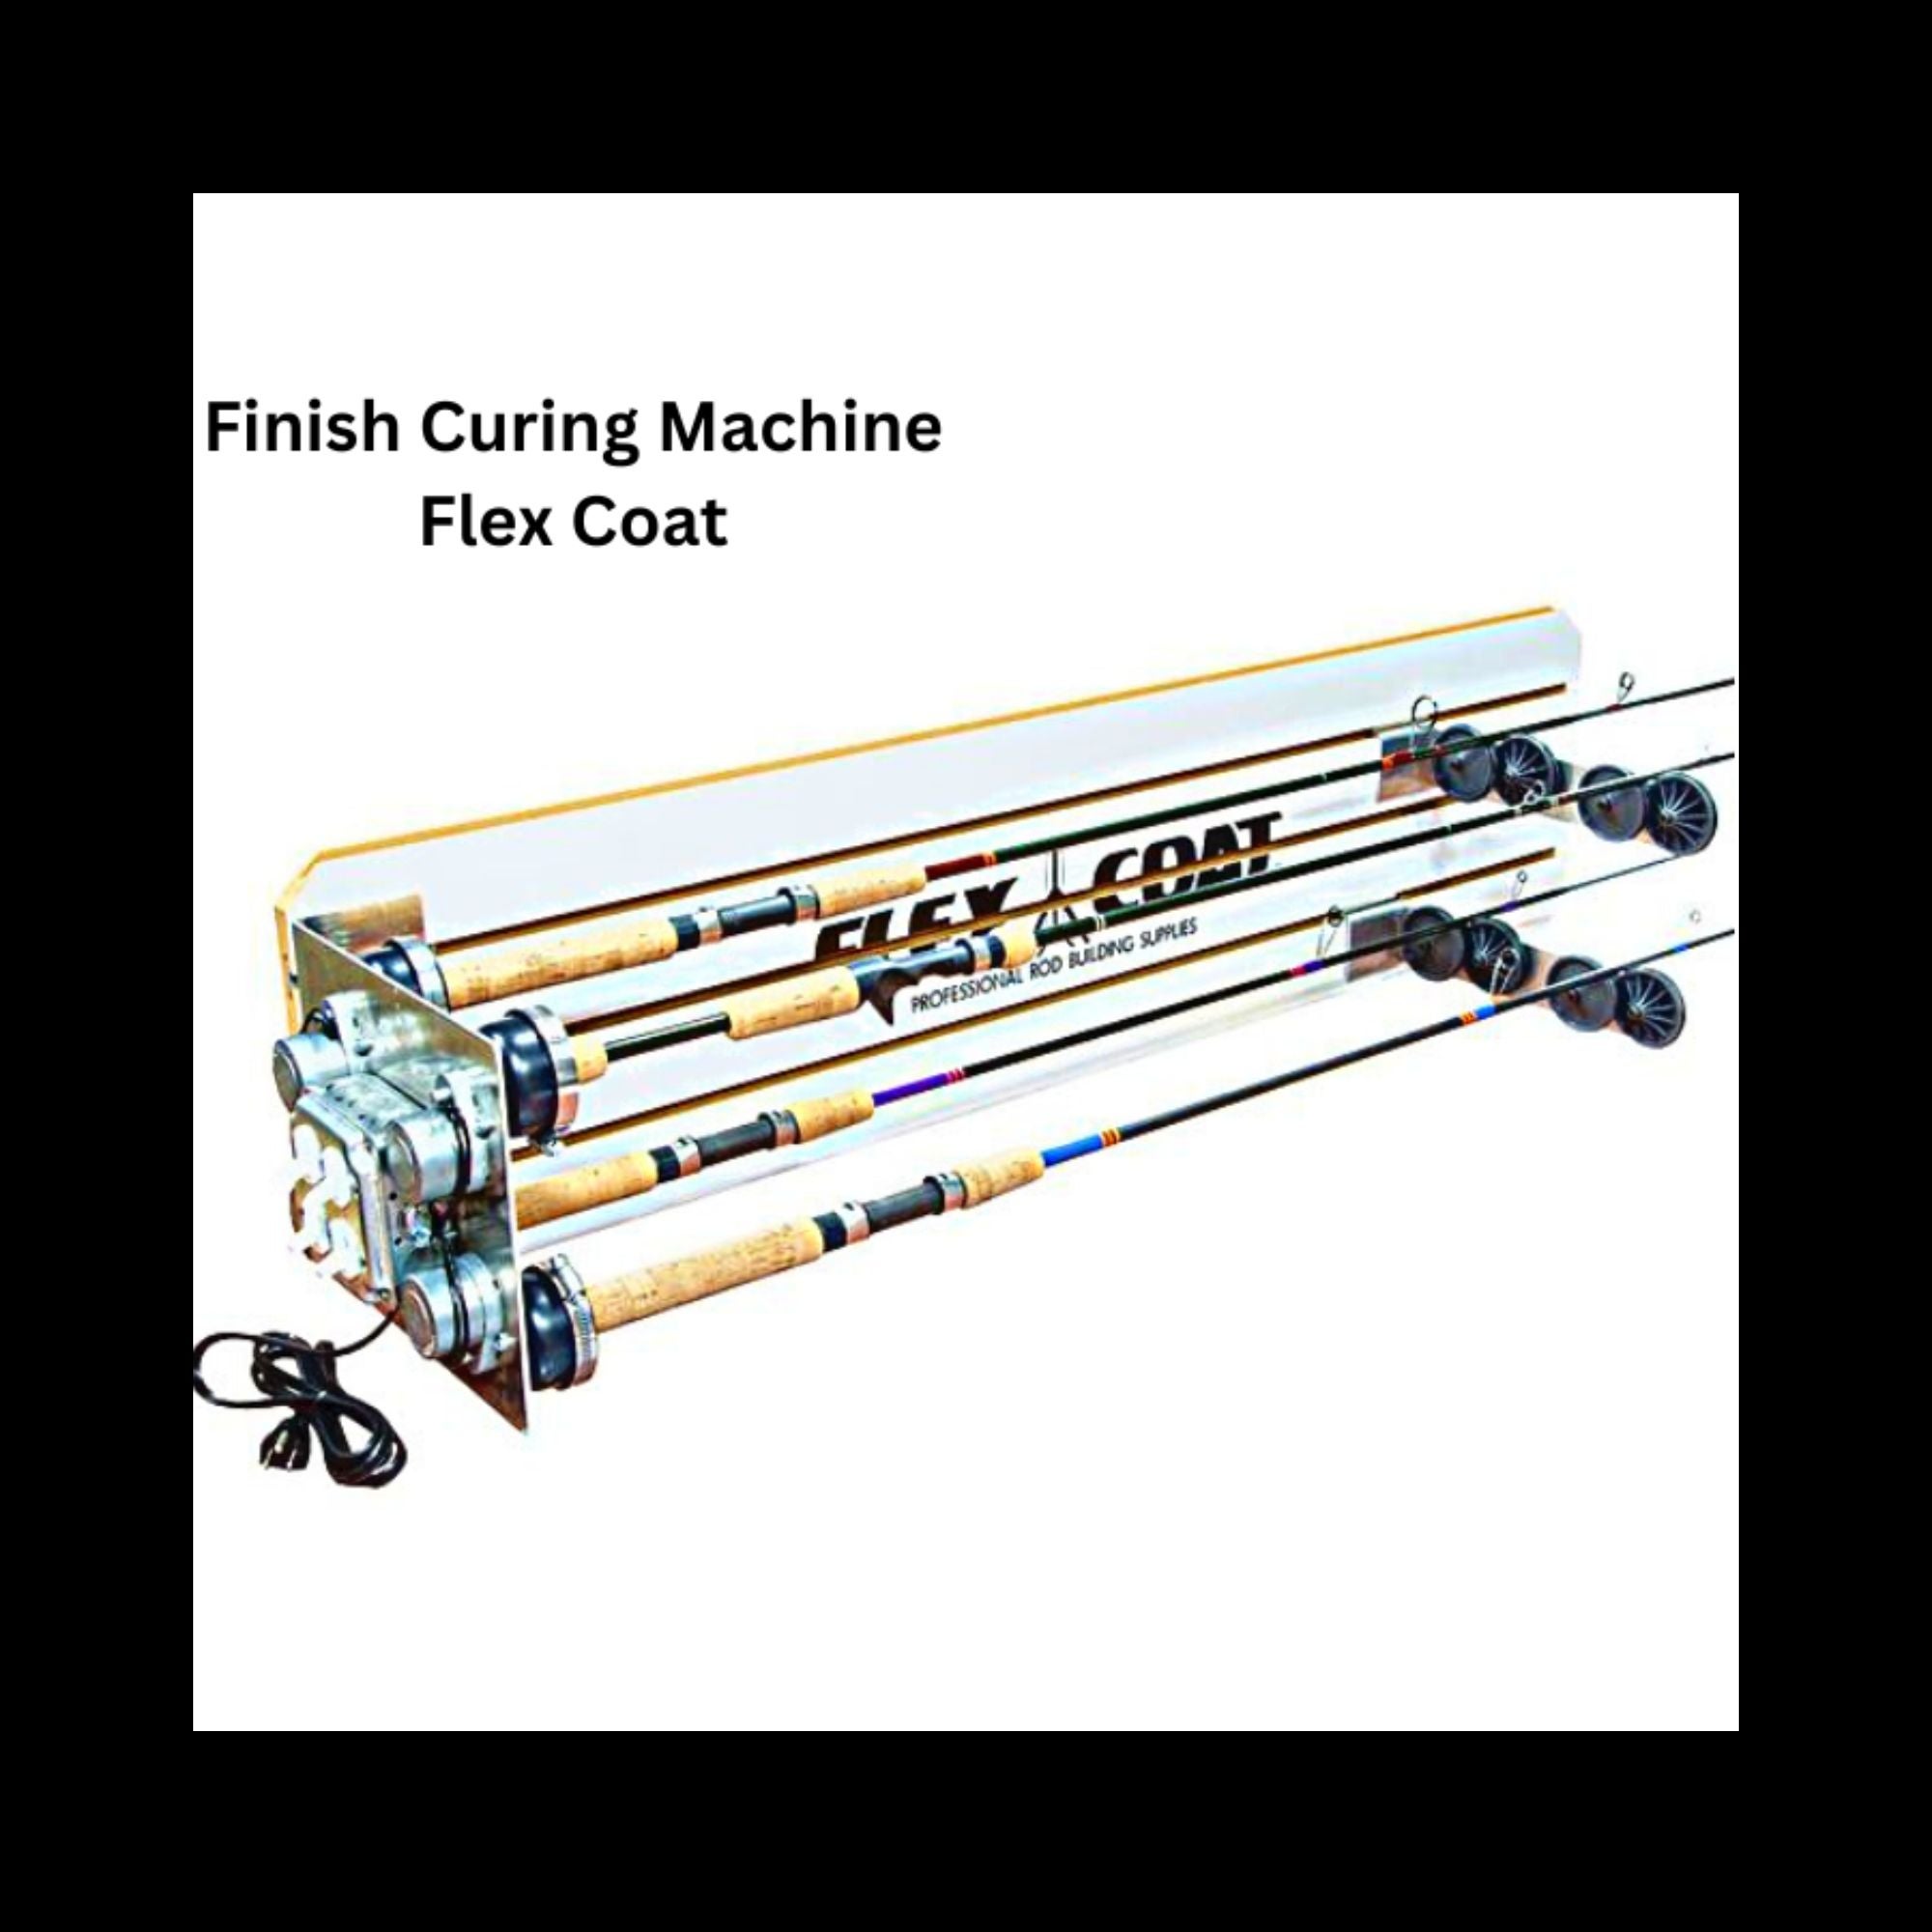 Finish Curing Machine, Flex Coat, Rod Building Equipment, Fishing